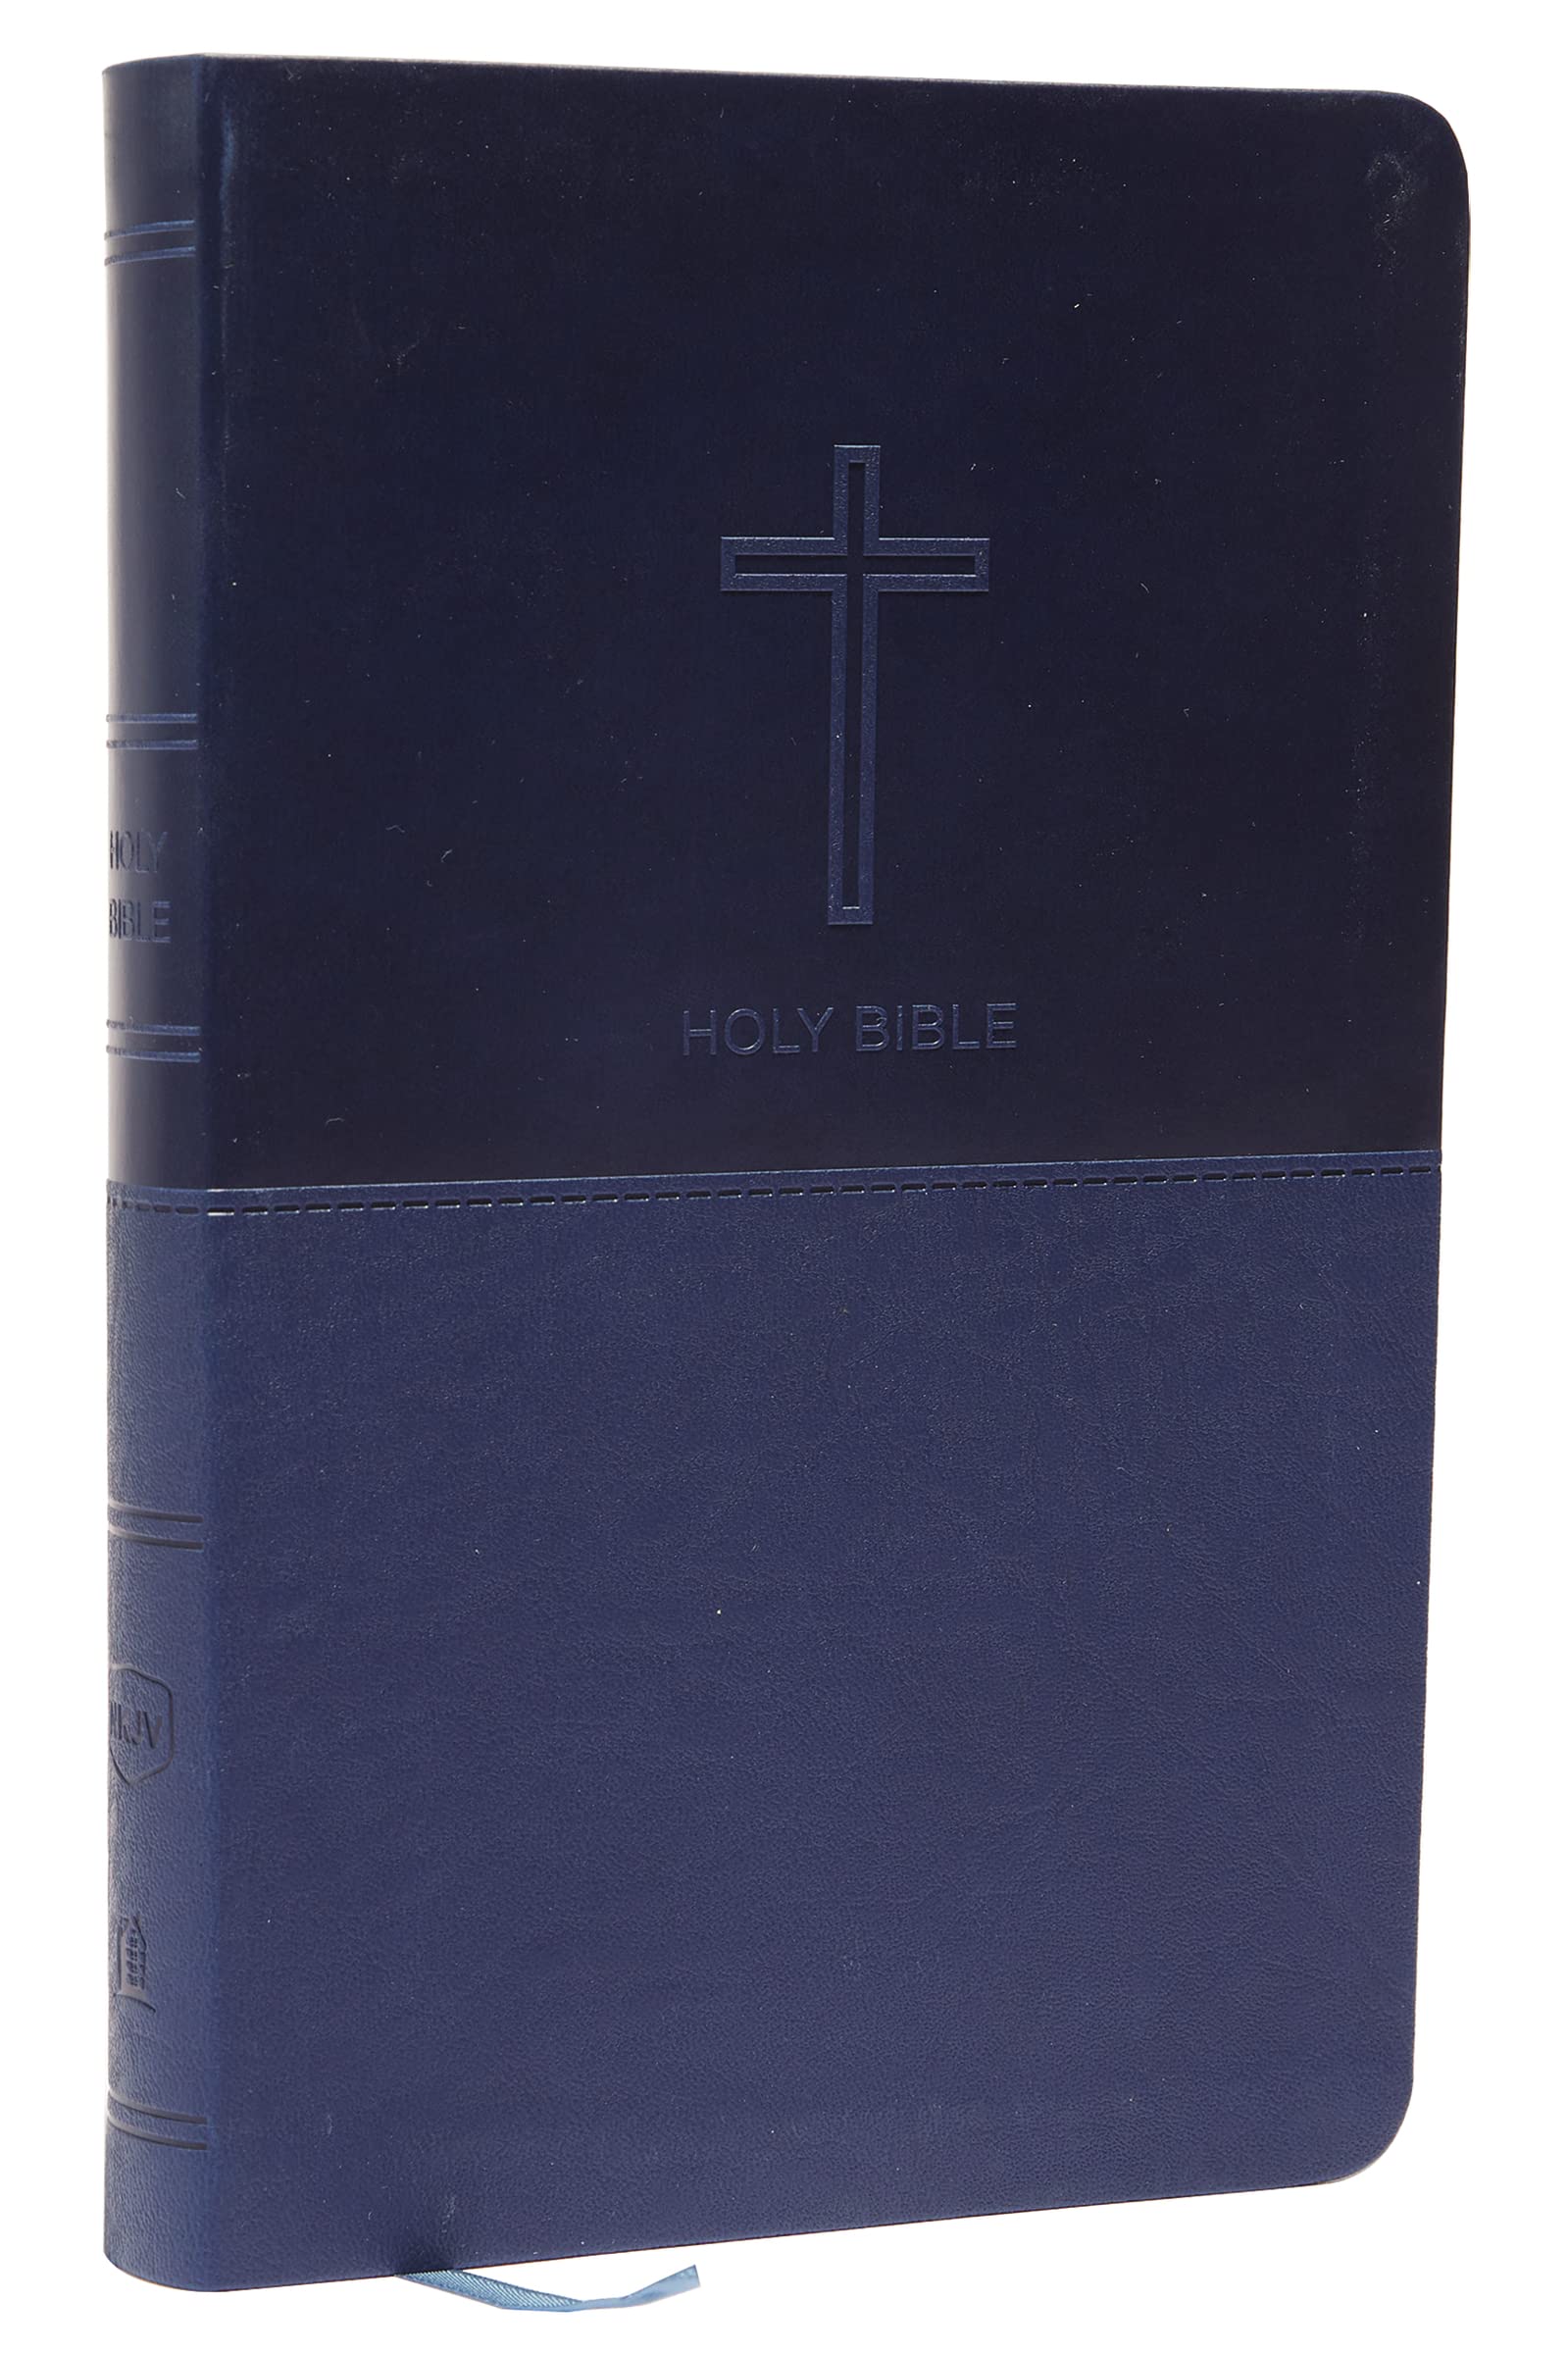 NKJV Value Thinline Bible, Navy Leathersoft